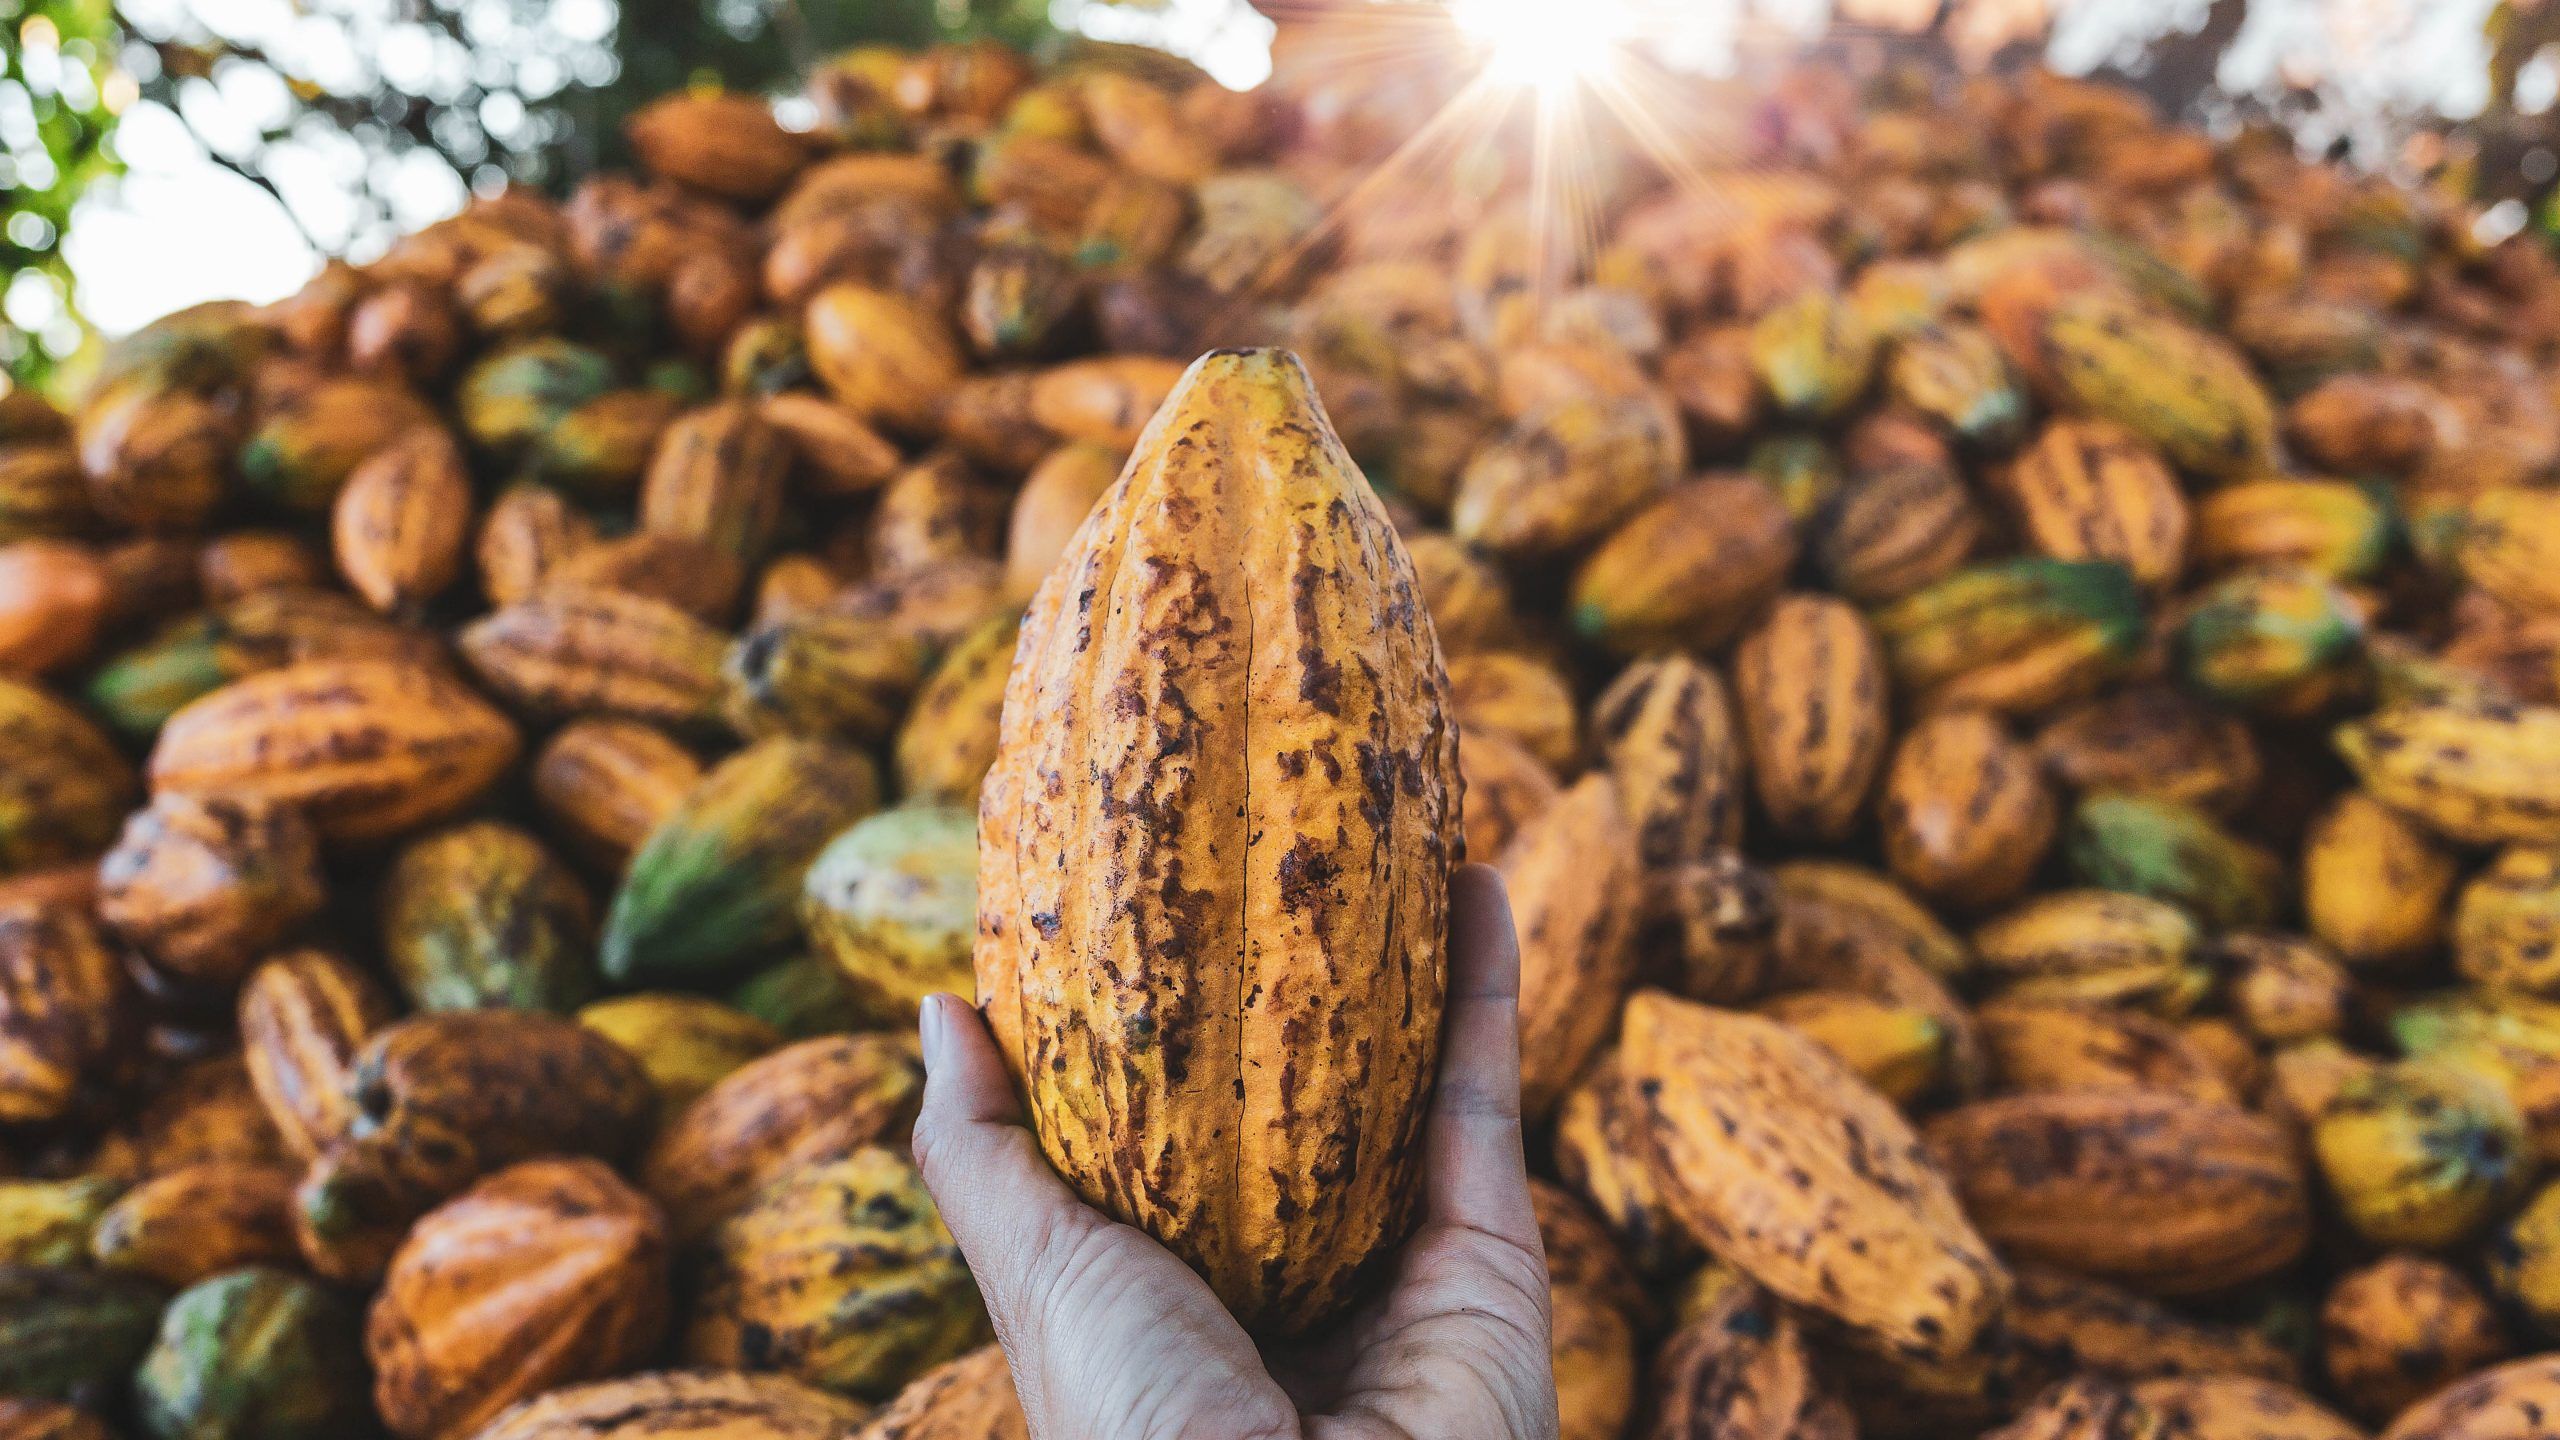 Kakaobohnen aus Madagaskar